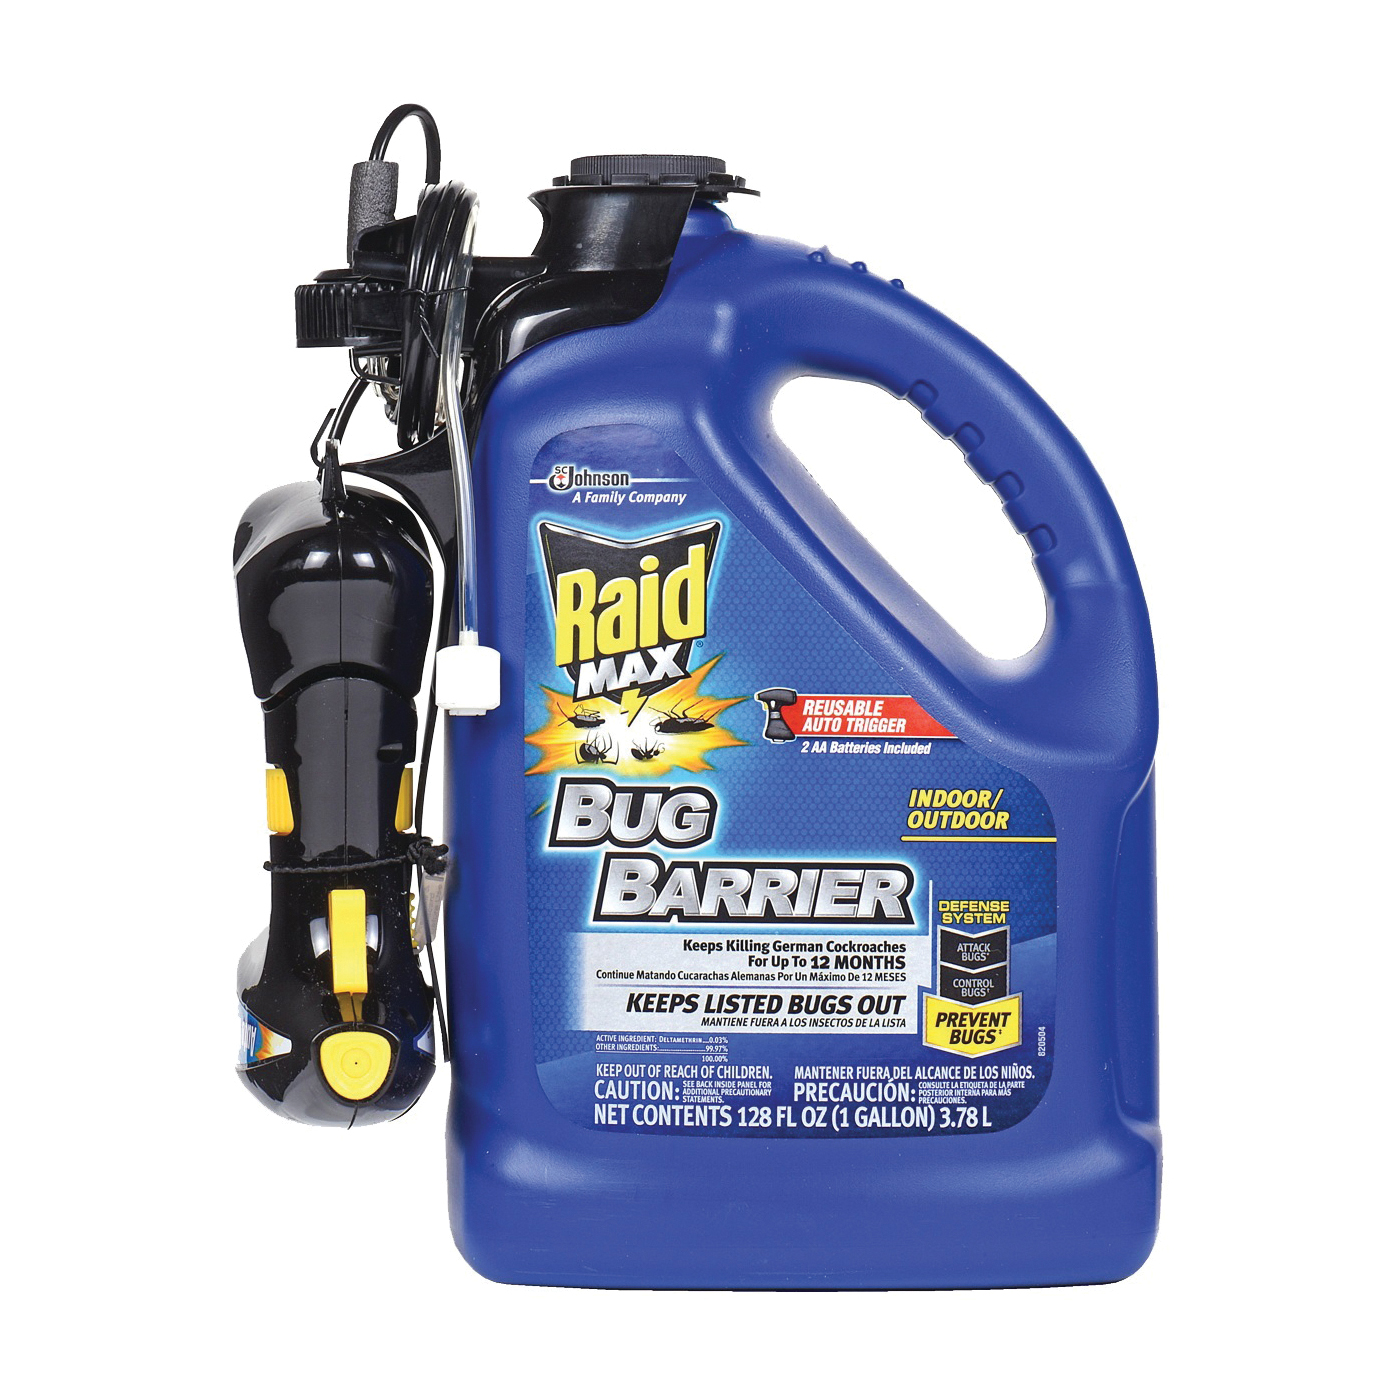 71110 Bug Barrier Starter, Liquid, Spray Application, 128 oz